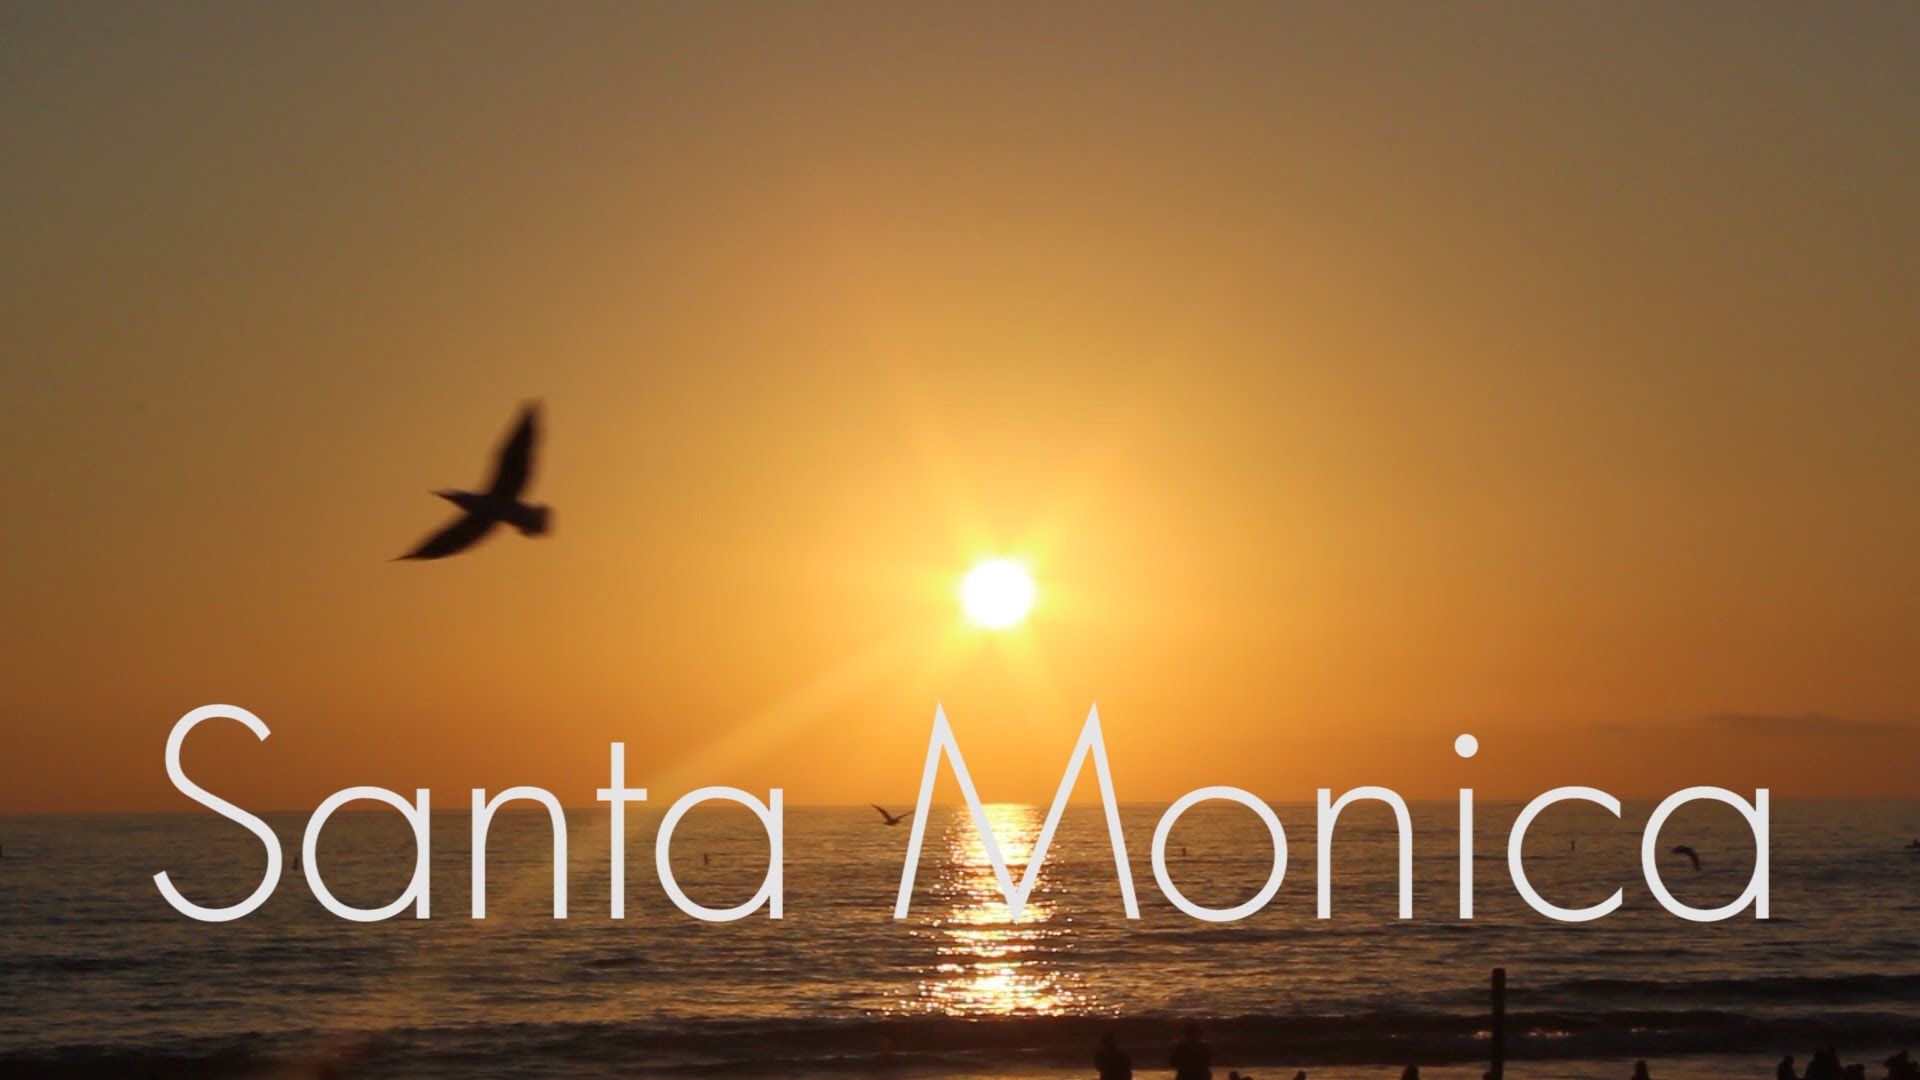  Santa Monica (2015) Poster 